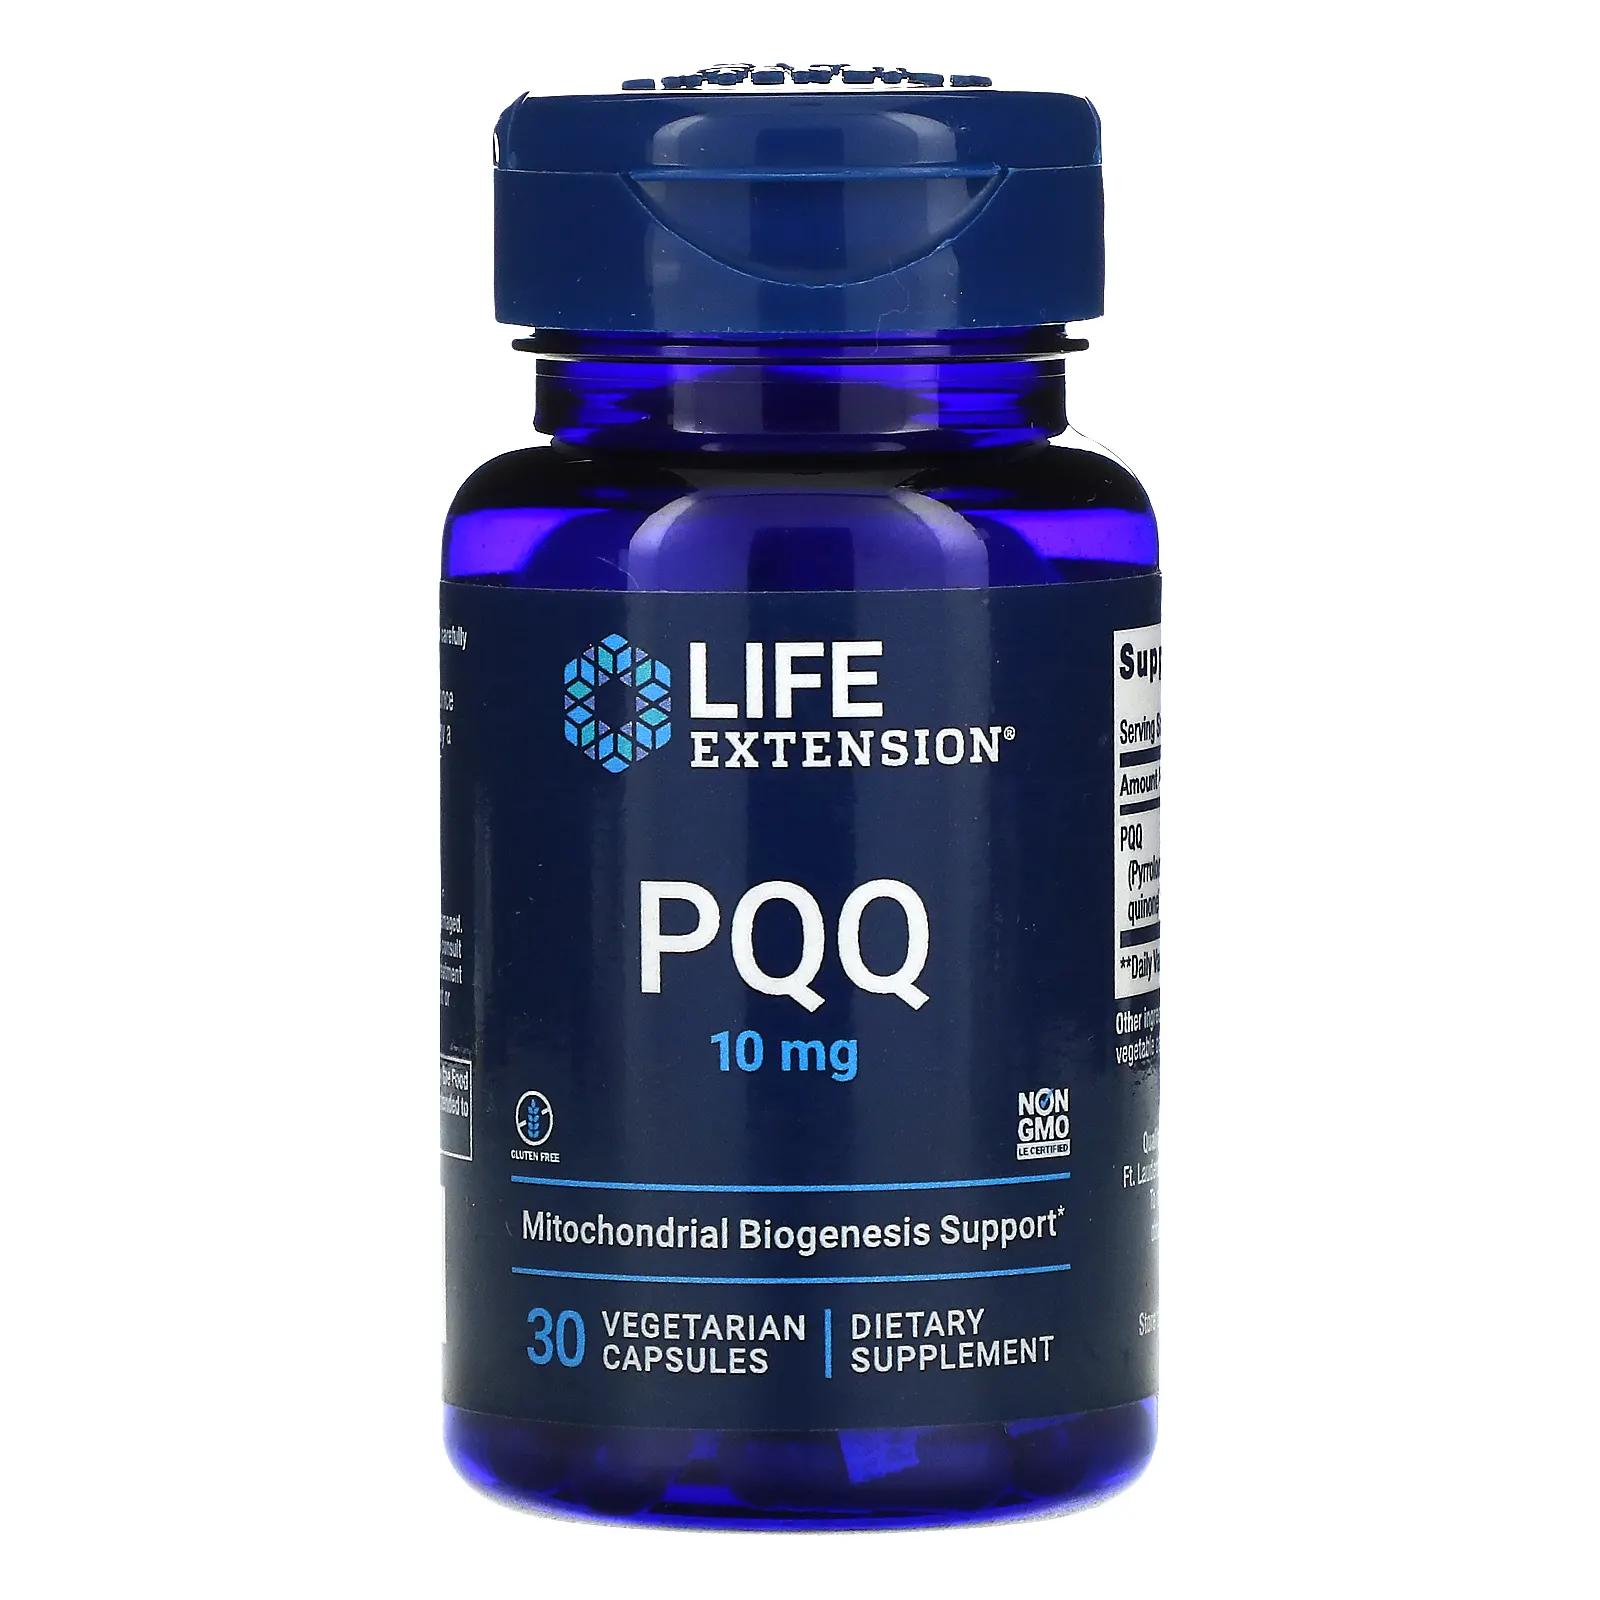 продление жизни супер мирафорте со стандартами life extension Life Extension PQQ Caps 10 mg 30 Vegetarian Capsules